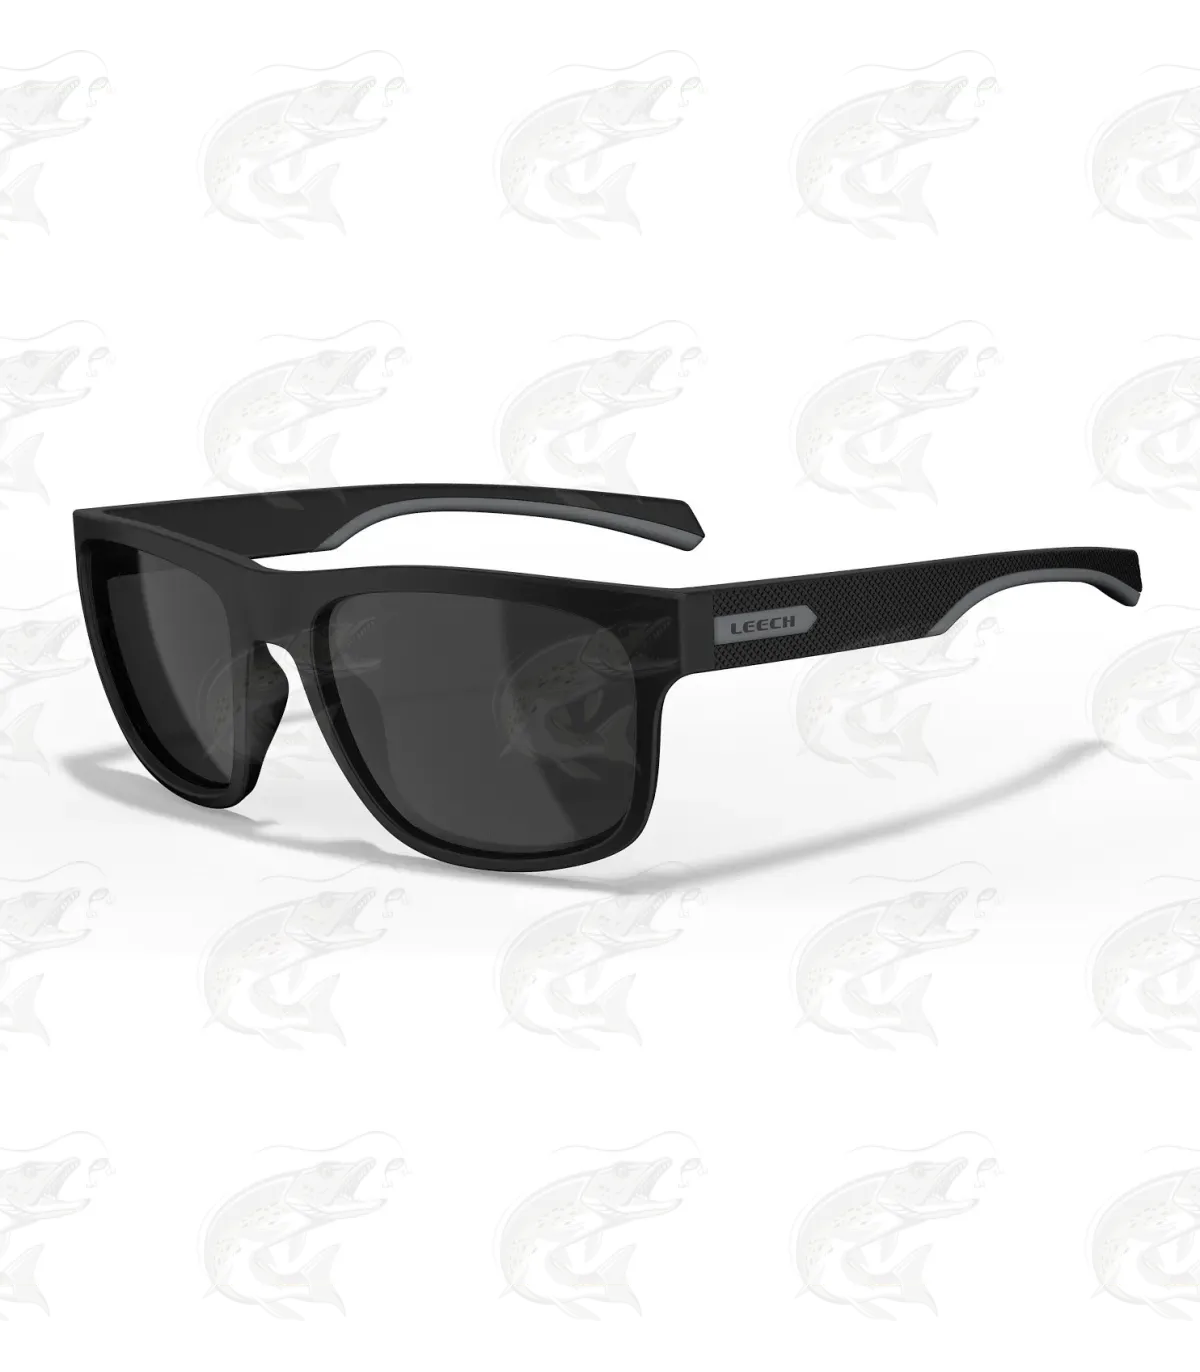 Leech Reflex Polarized Sunglasses